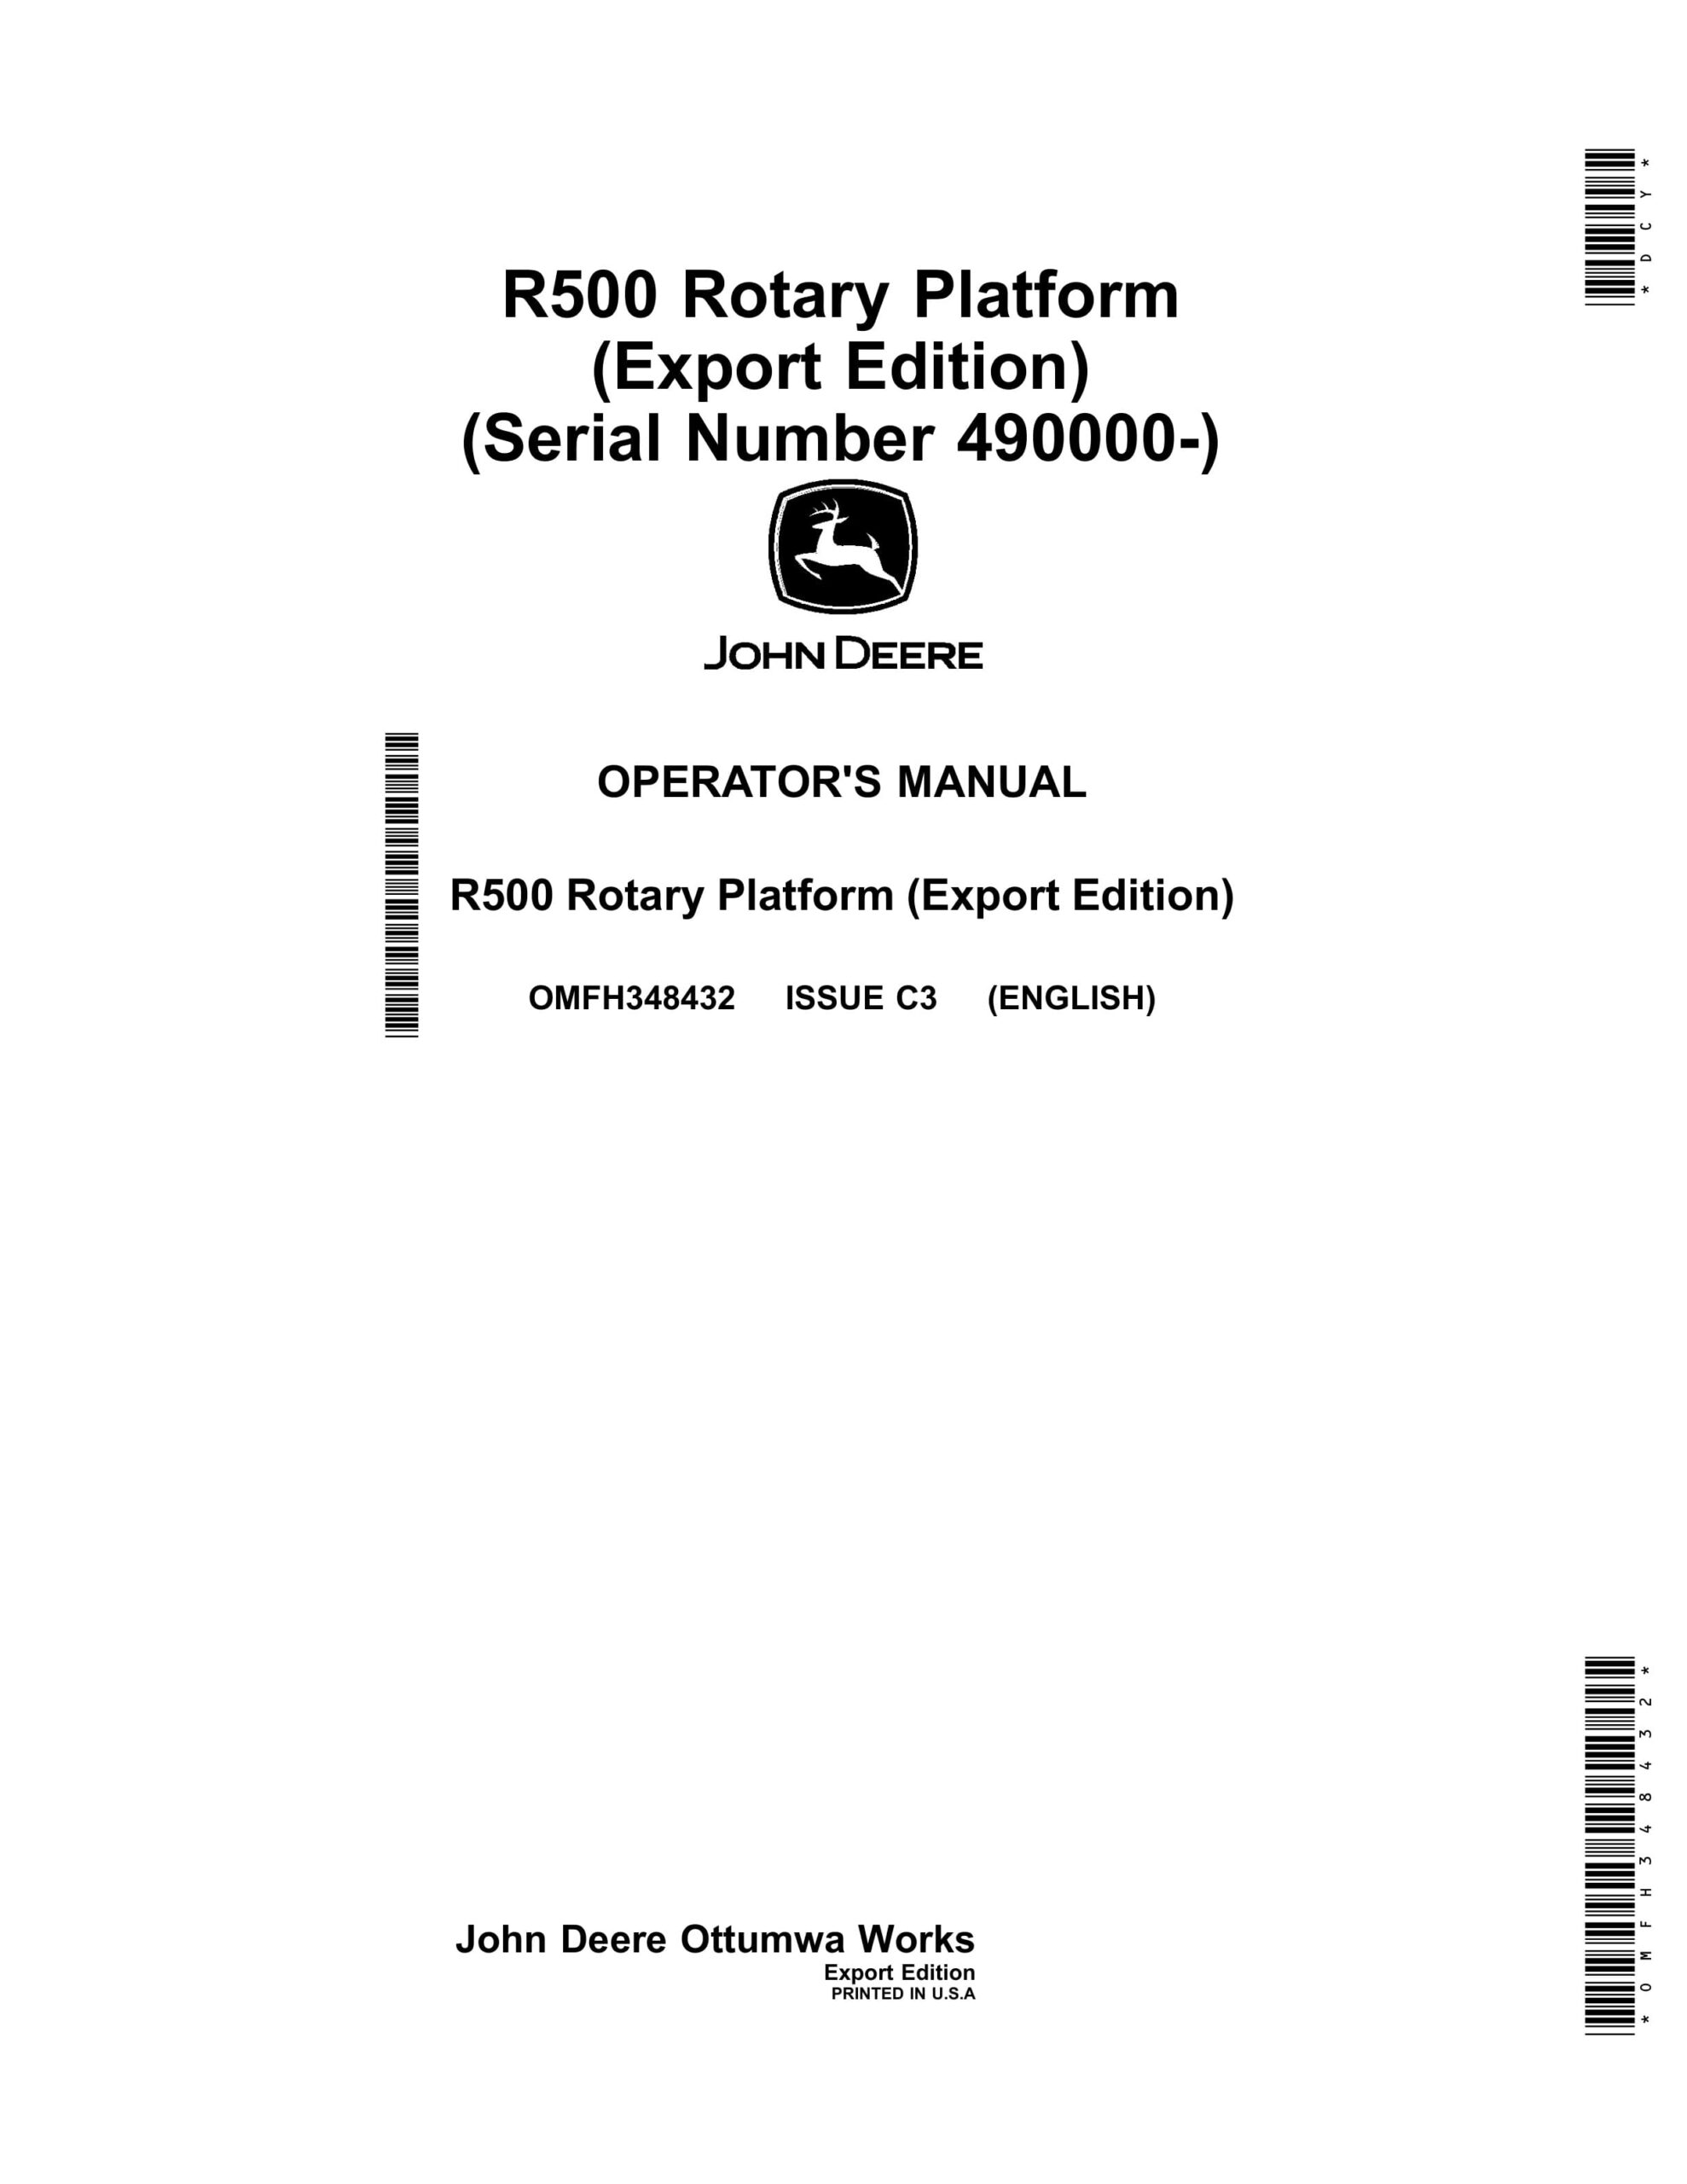 John Deere R500 Rotary Platform Operator Manual OMFH348432-1